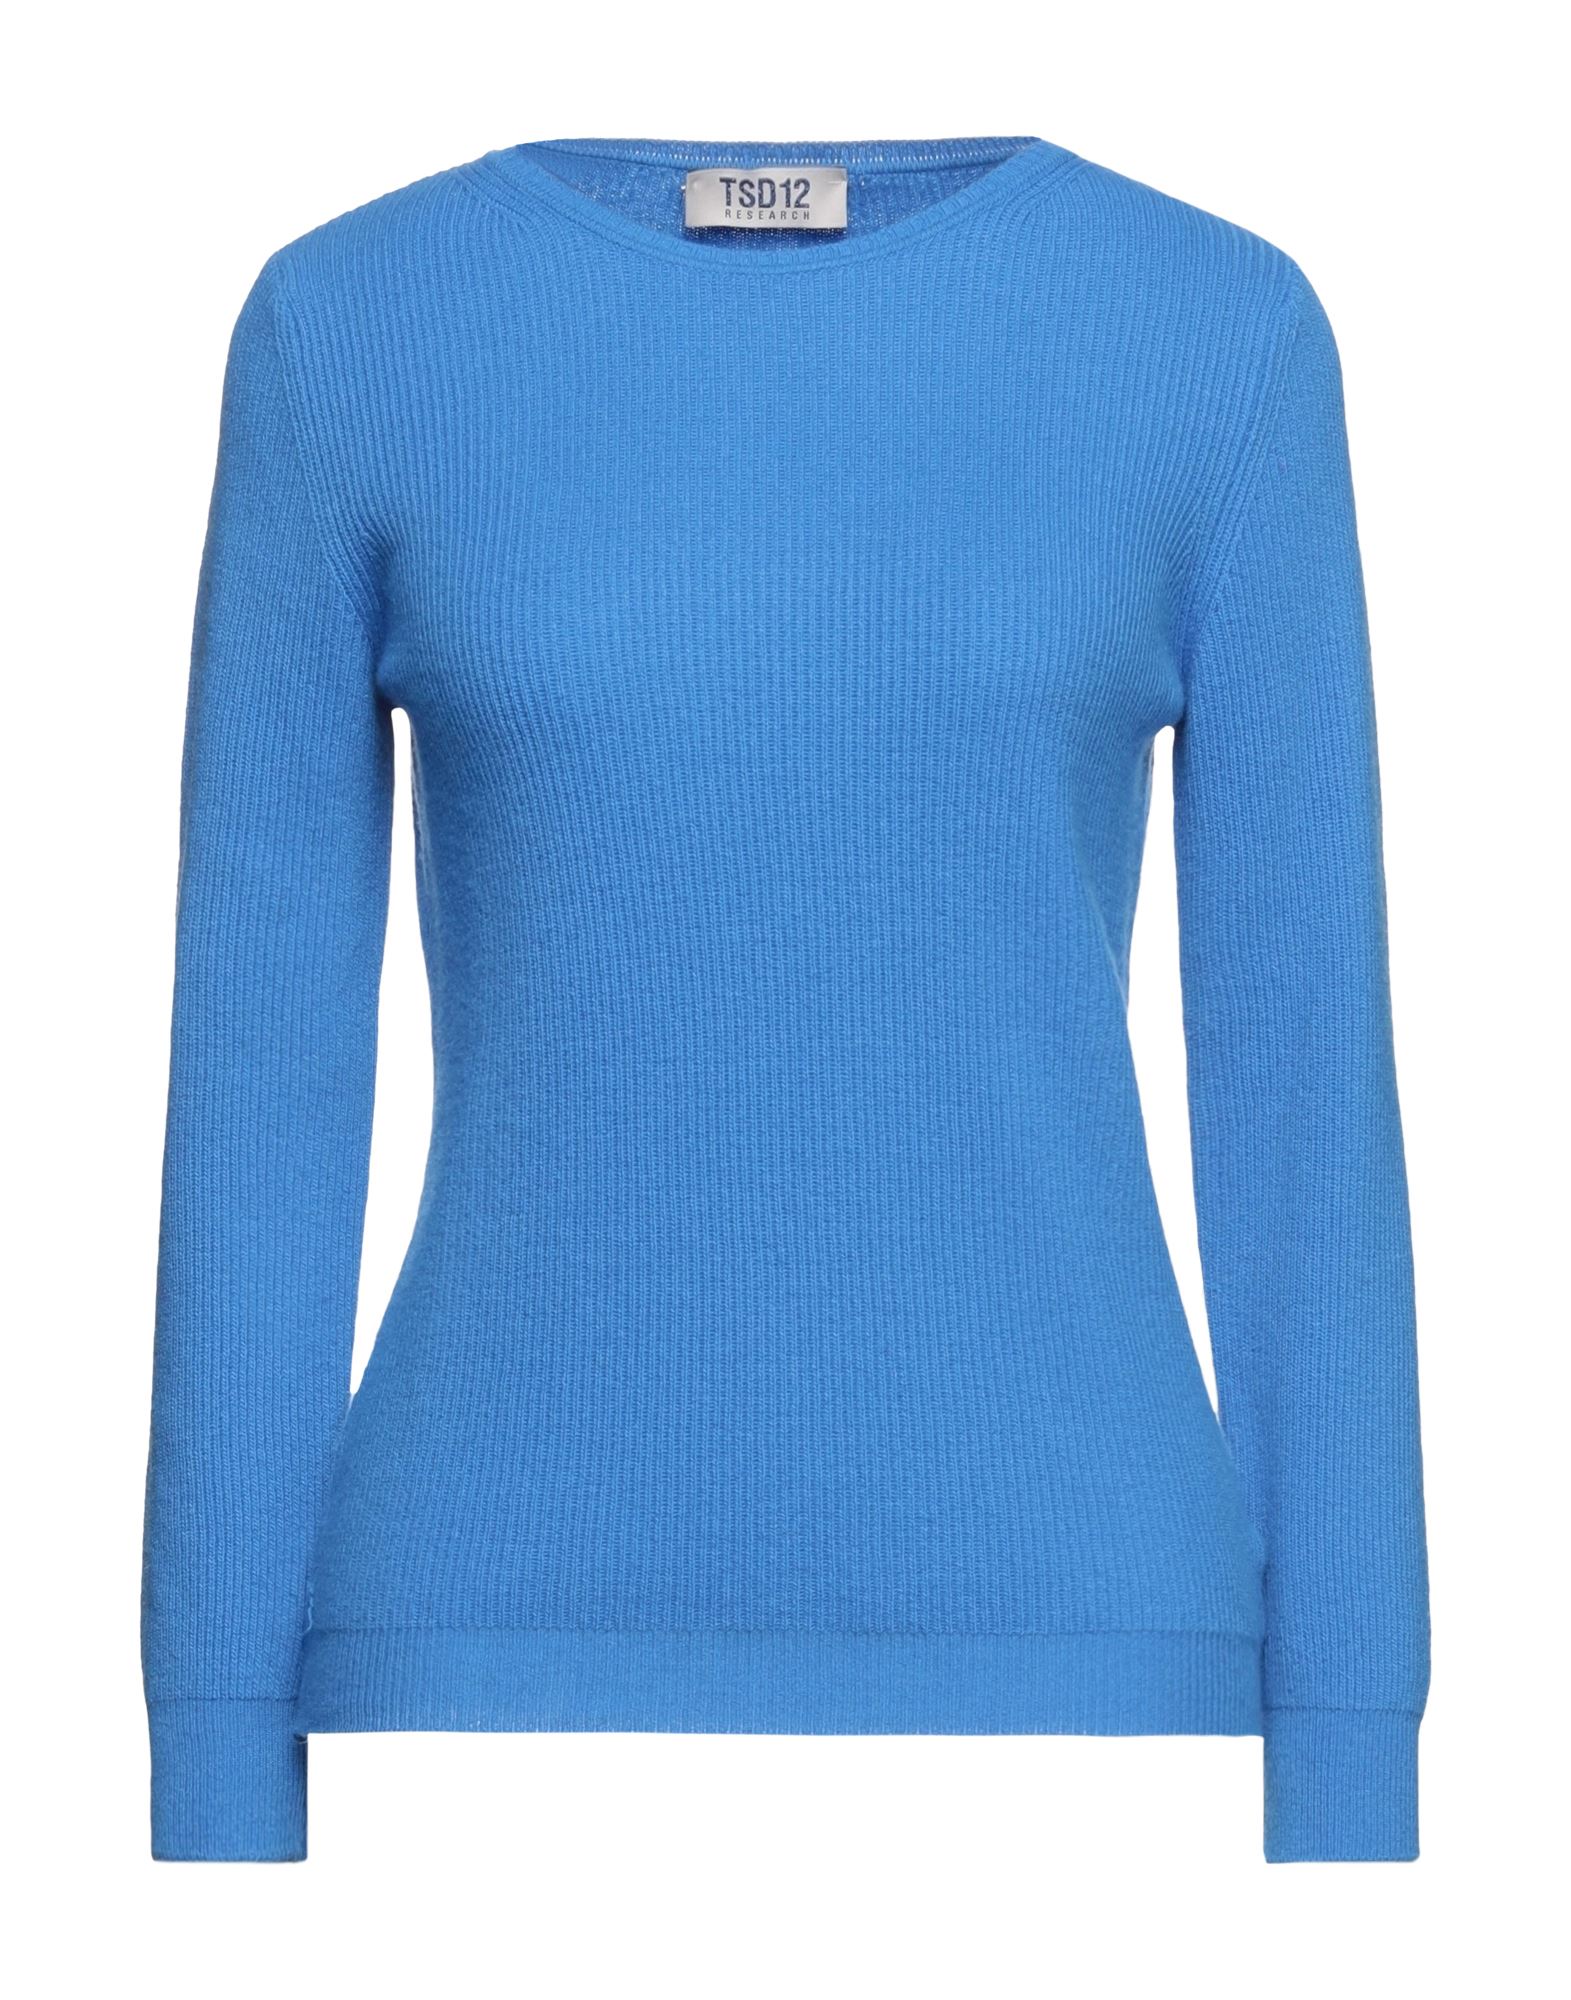 Tsd12 Sweaters In Bright Blue